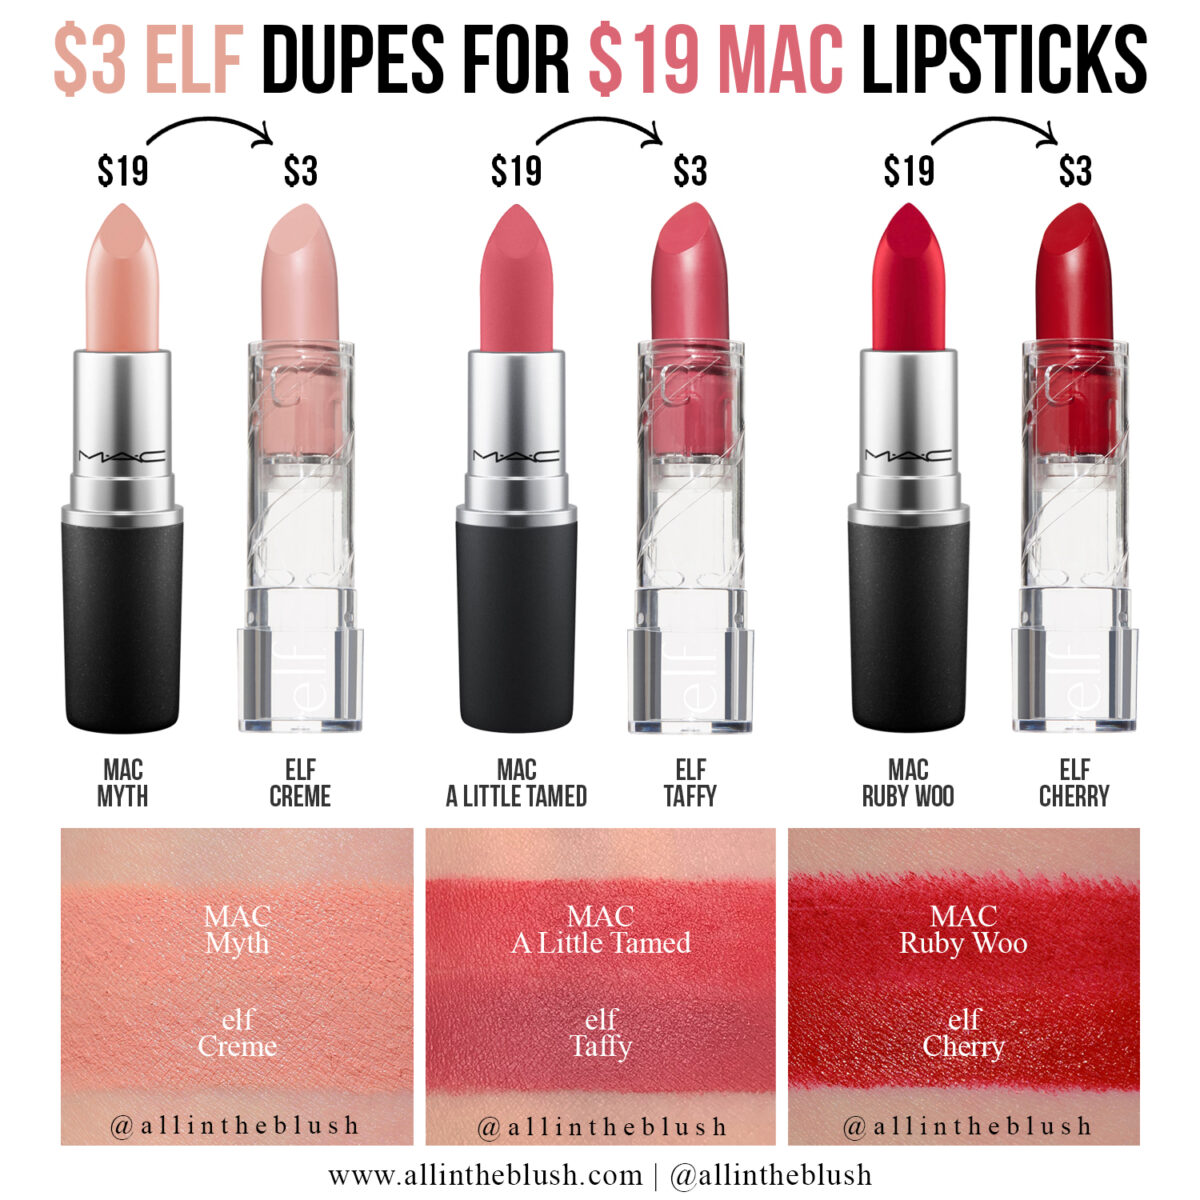 $3 e.l.f. Dupes for $19 MAC Lipsticks